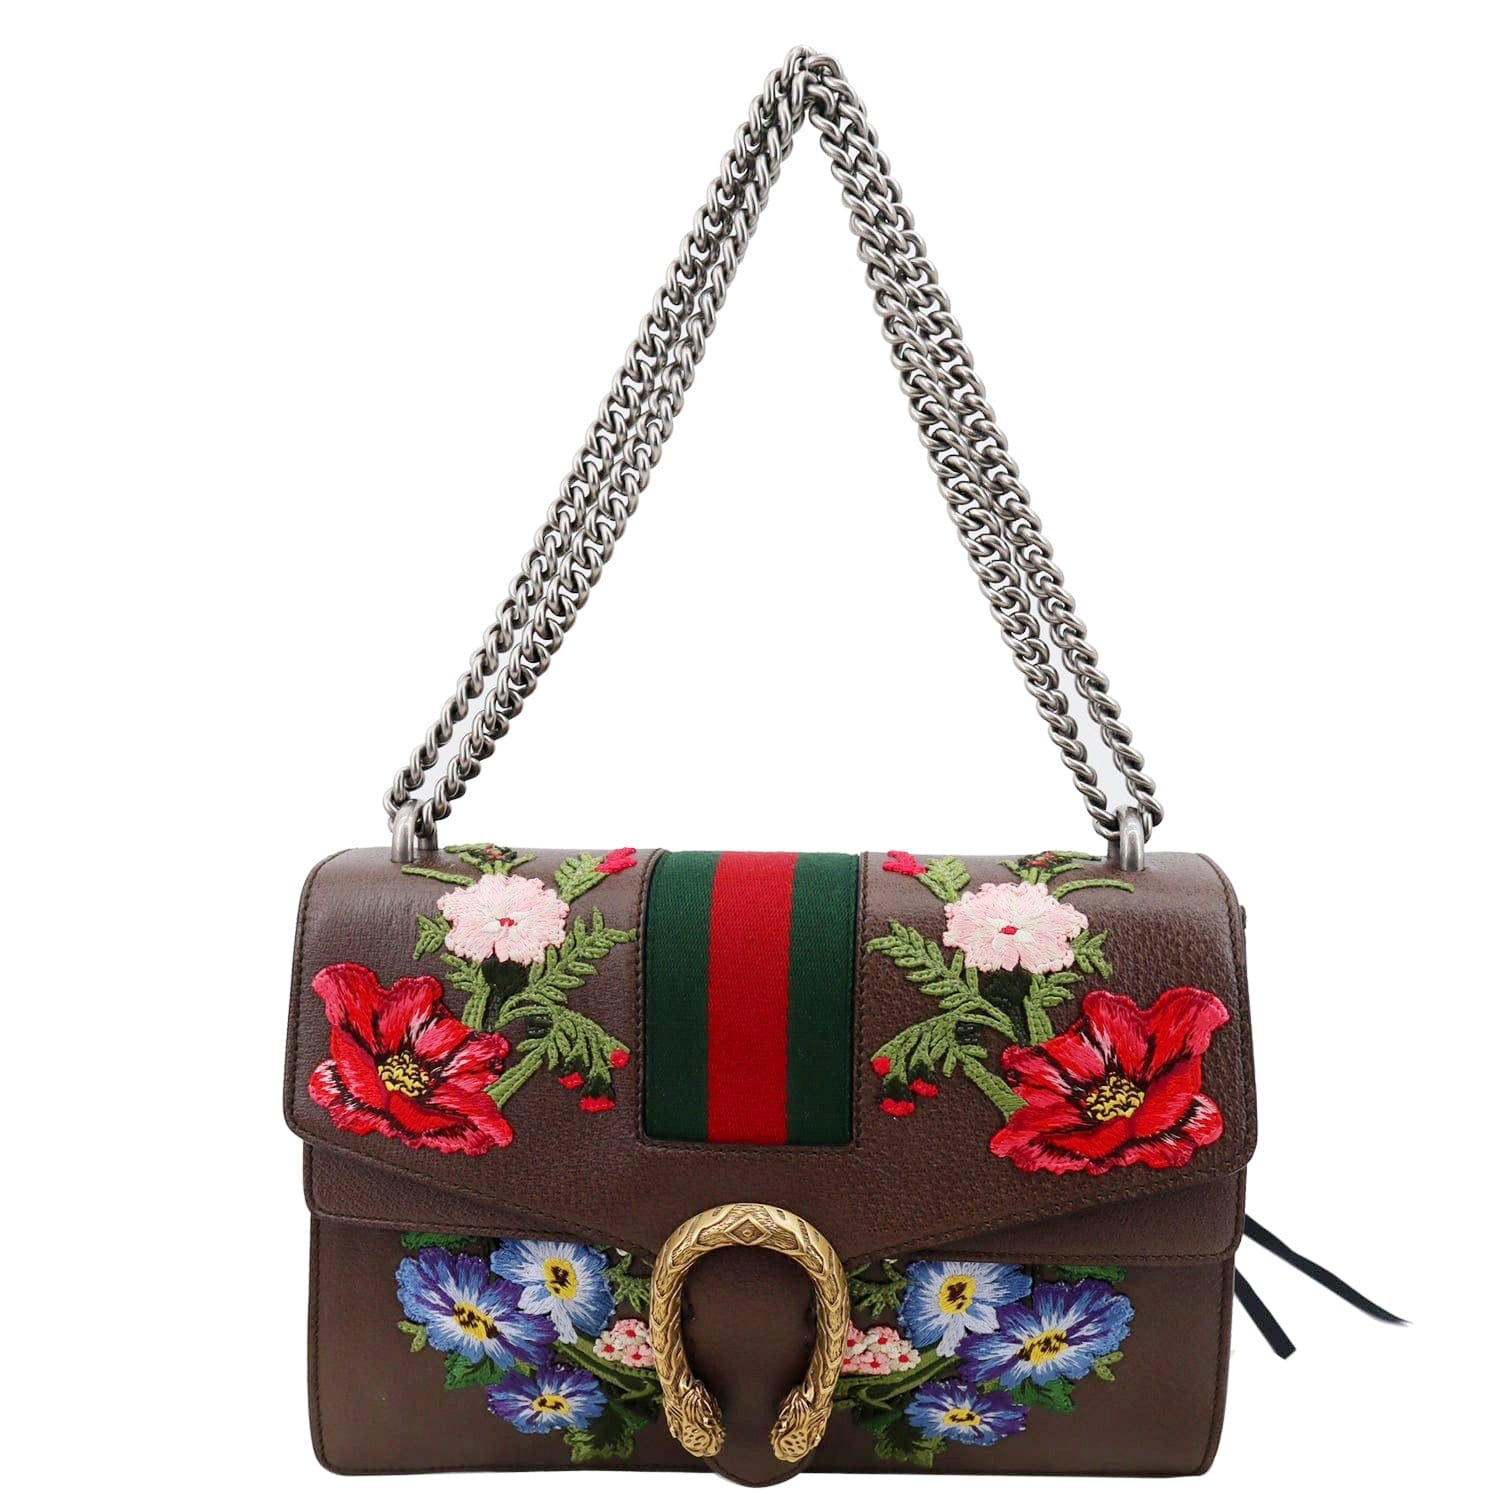 New Gucci Dionysus bag, Size Medium